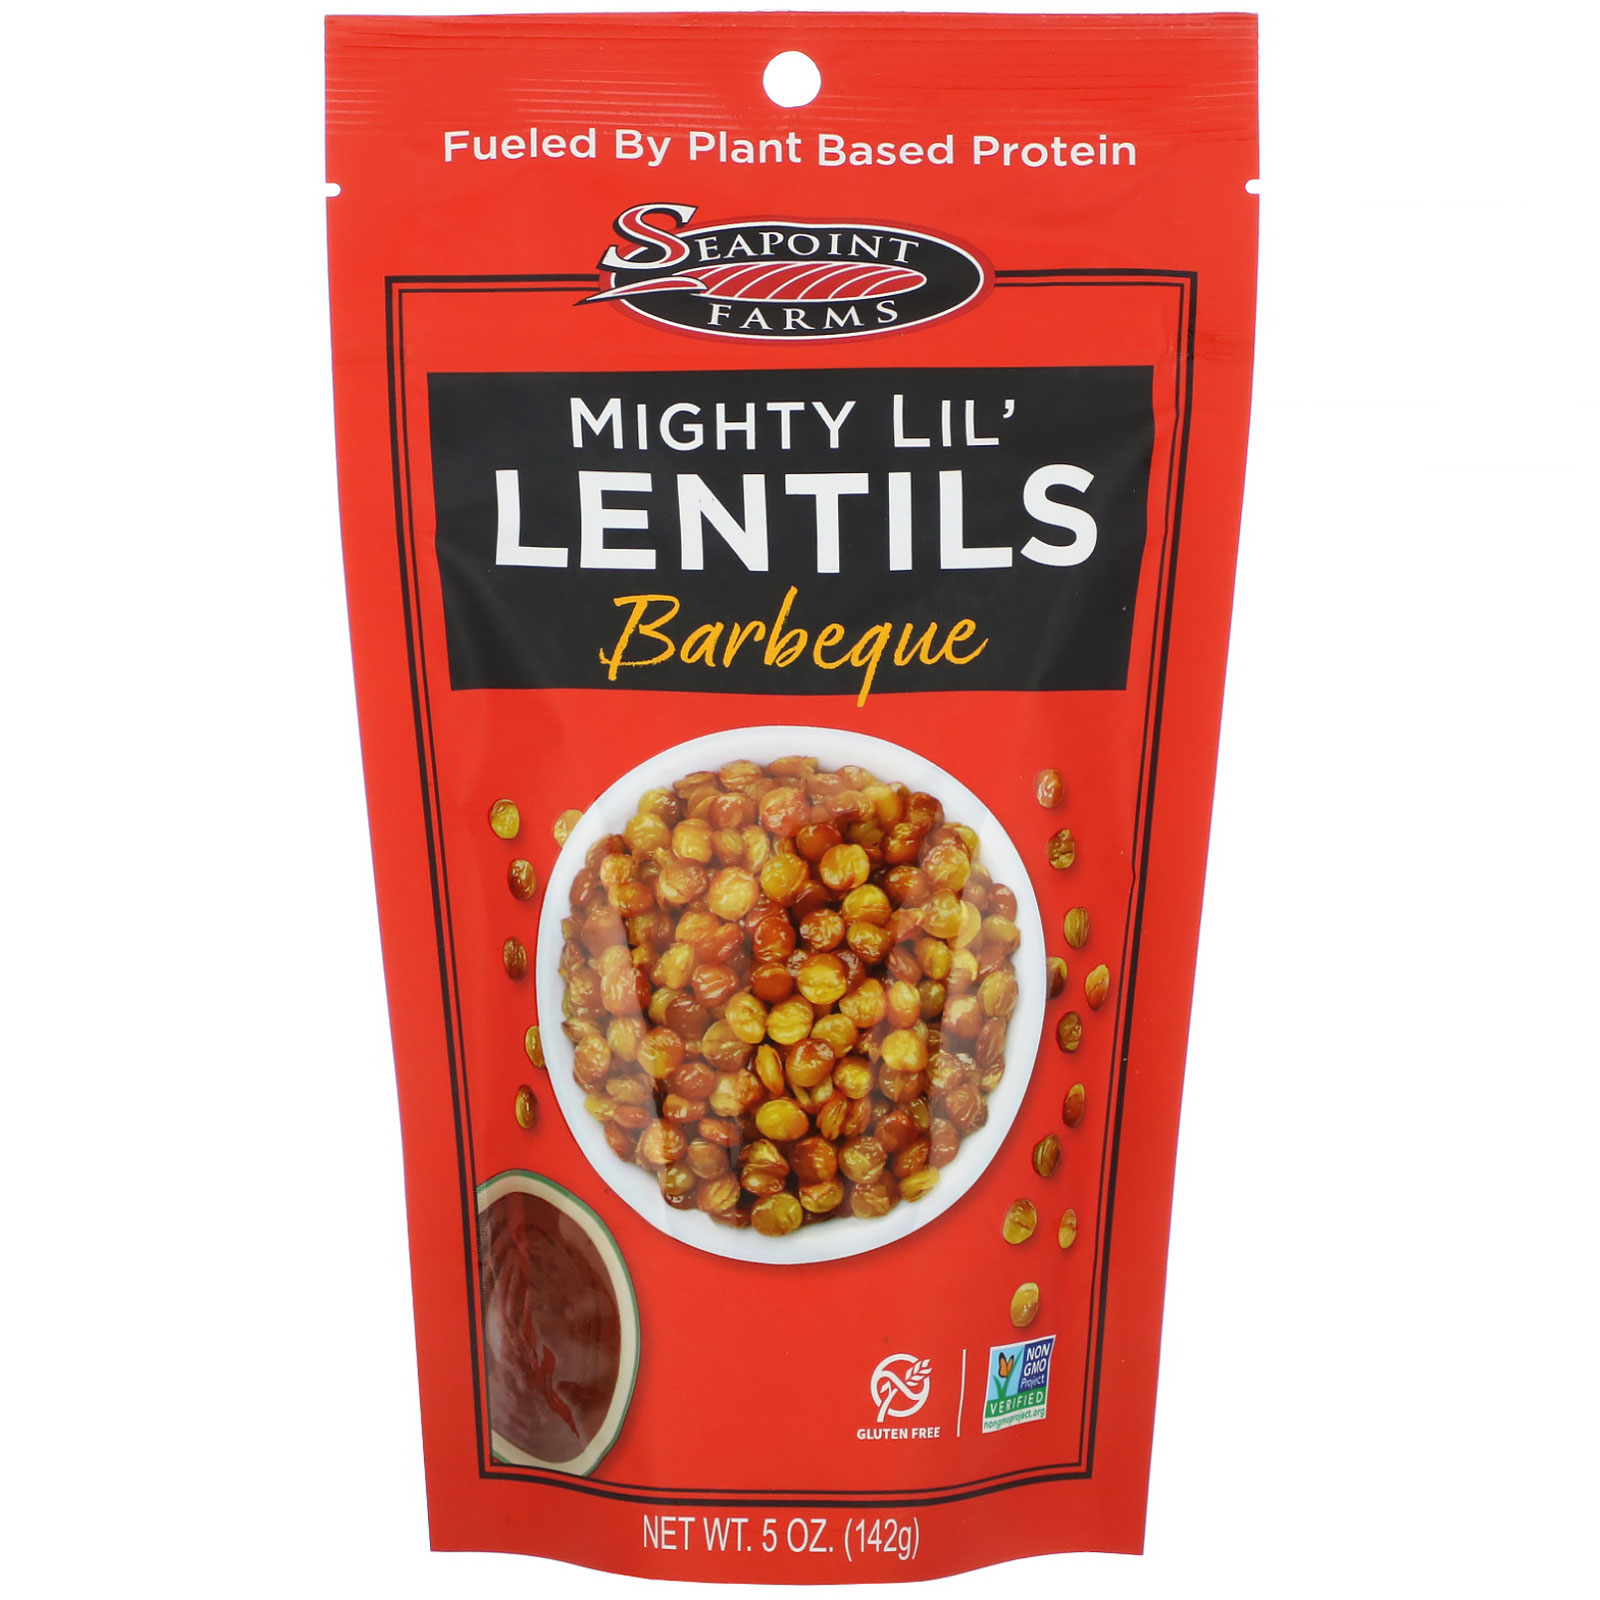 Seapoint Farms Mighty Lil' Lentils バーベキュー 142g 2021春大特価セール 最大89%OFFクーポン 5オンス 小さい優れモノのレンズ豆